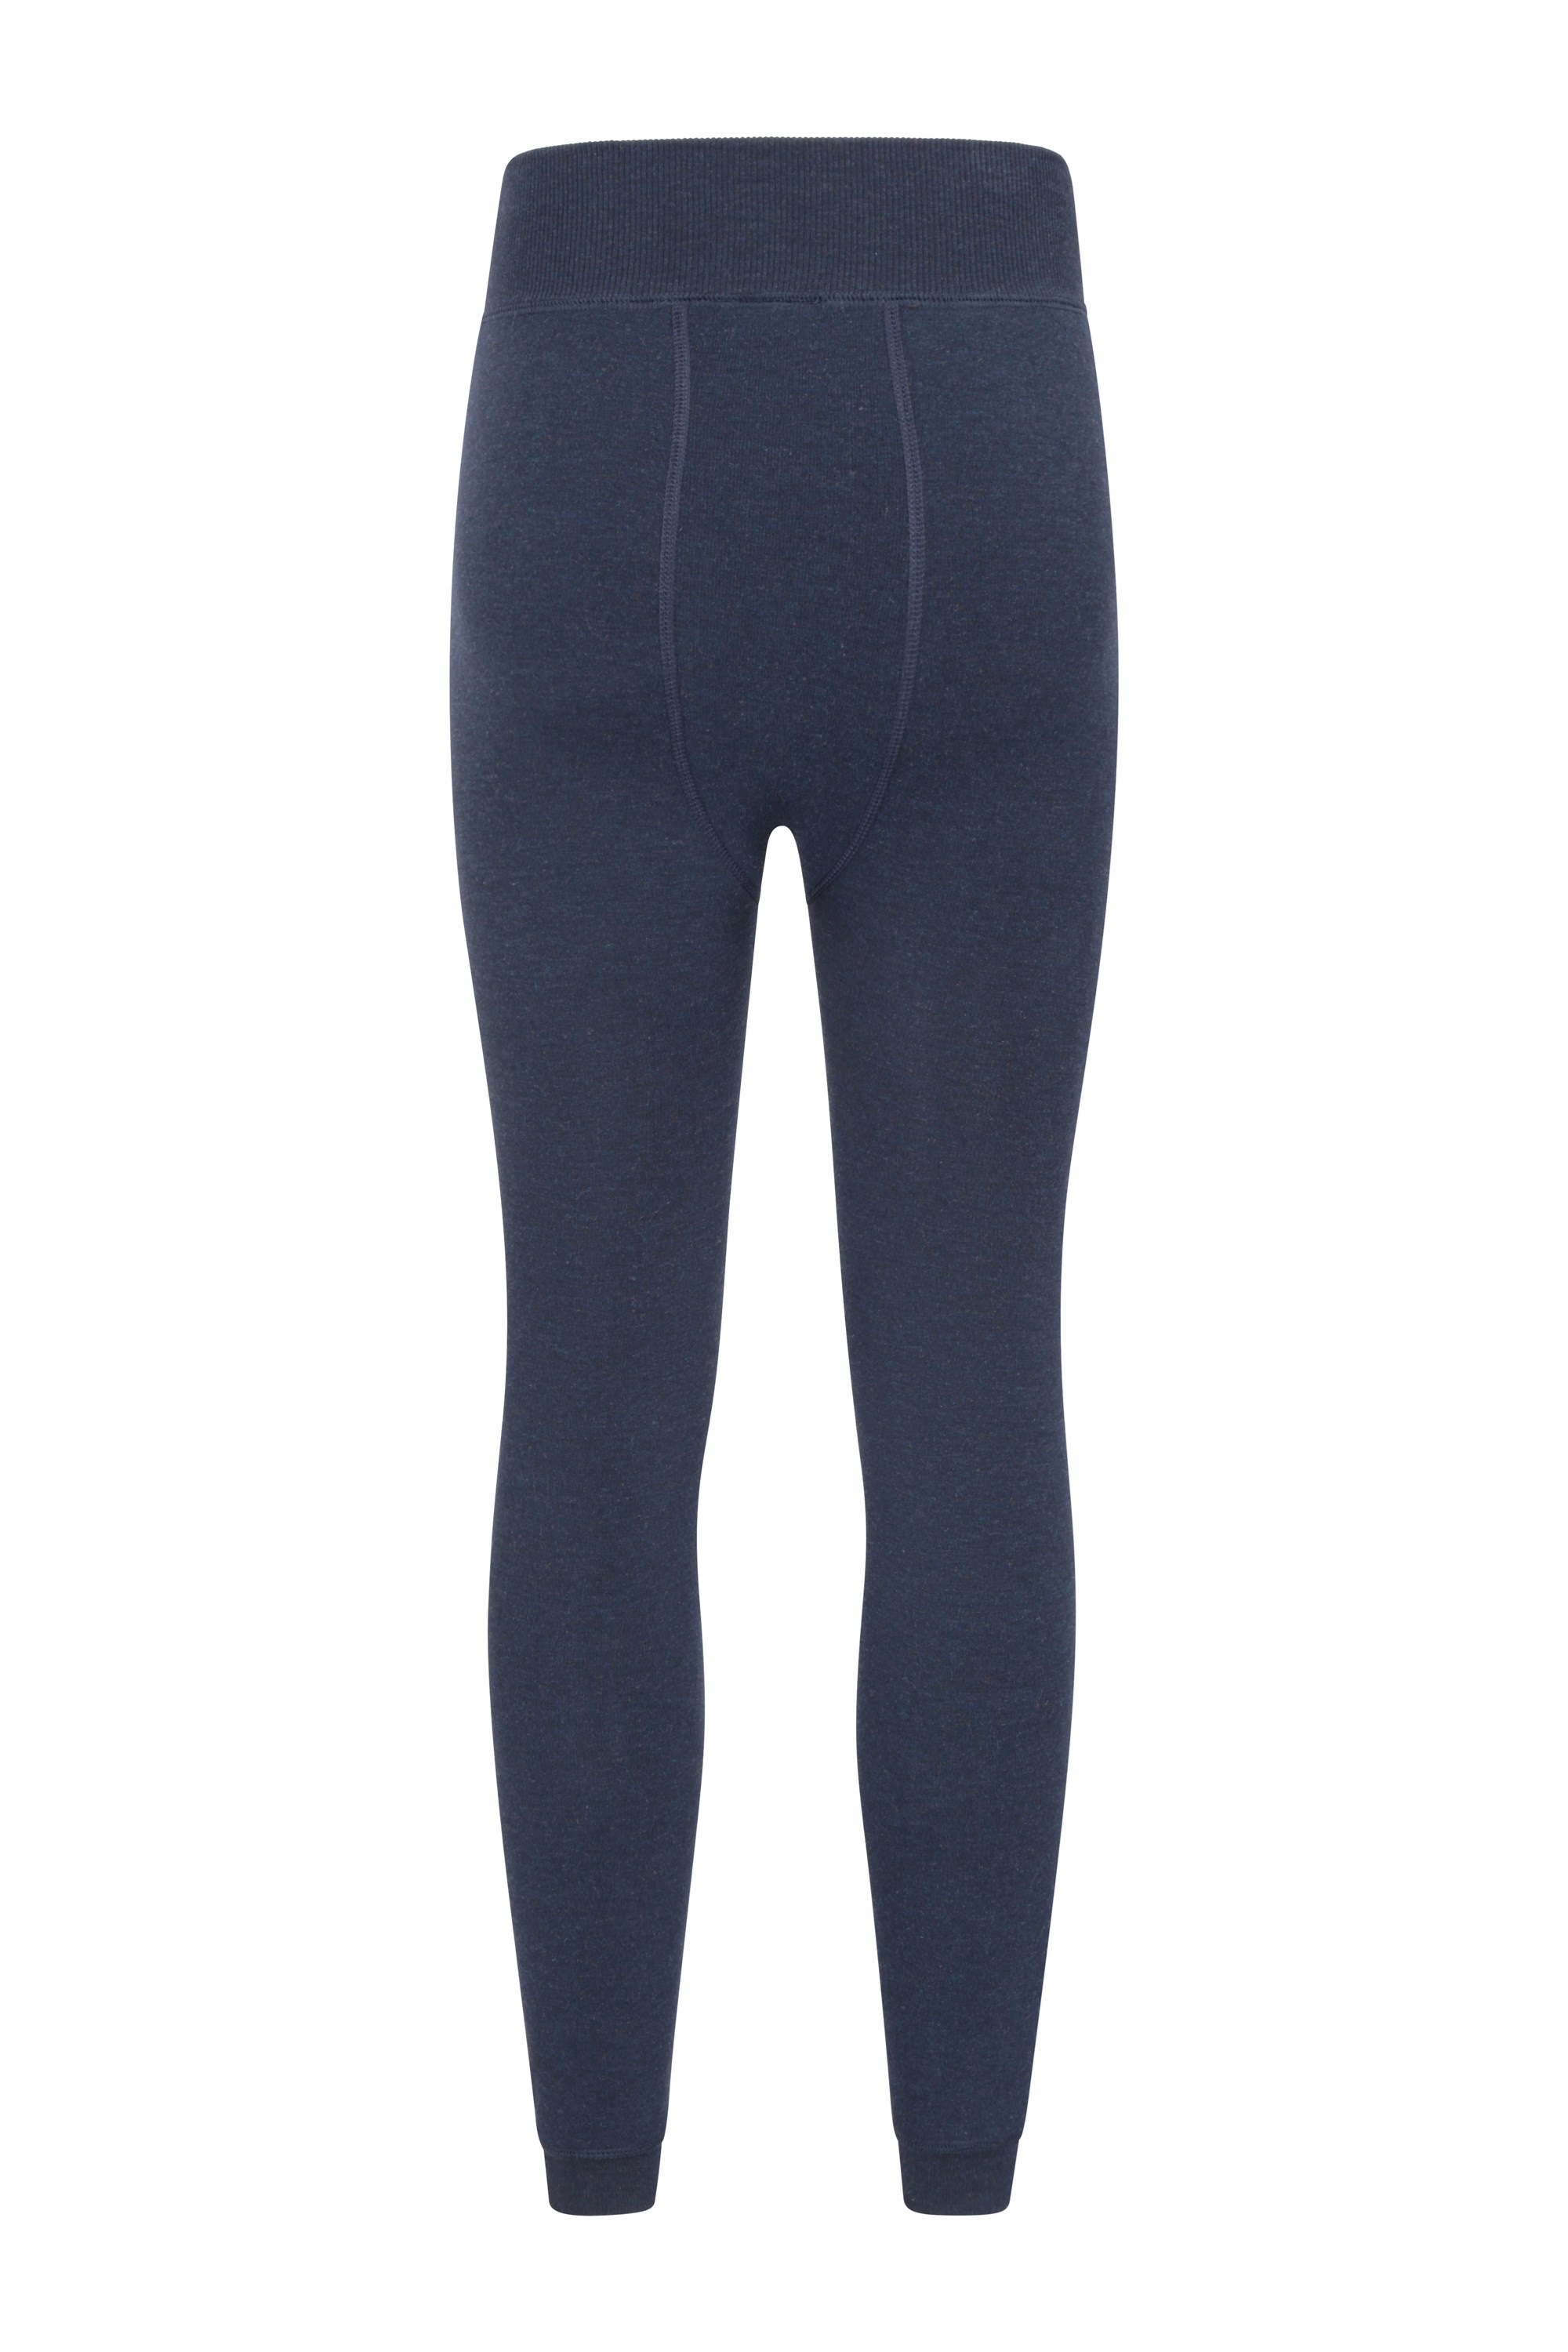  Womens Thermal Pants Fleece Lined Leggings Blue Large